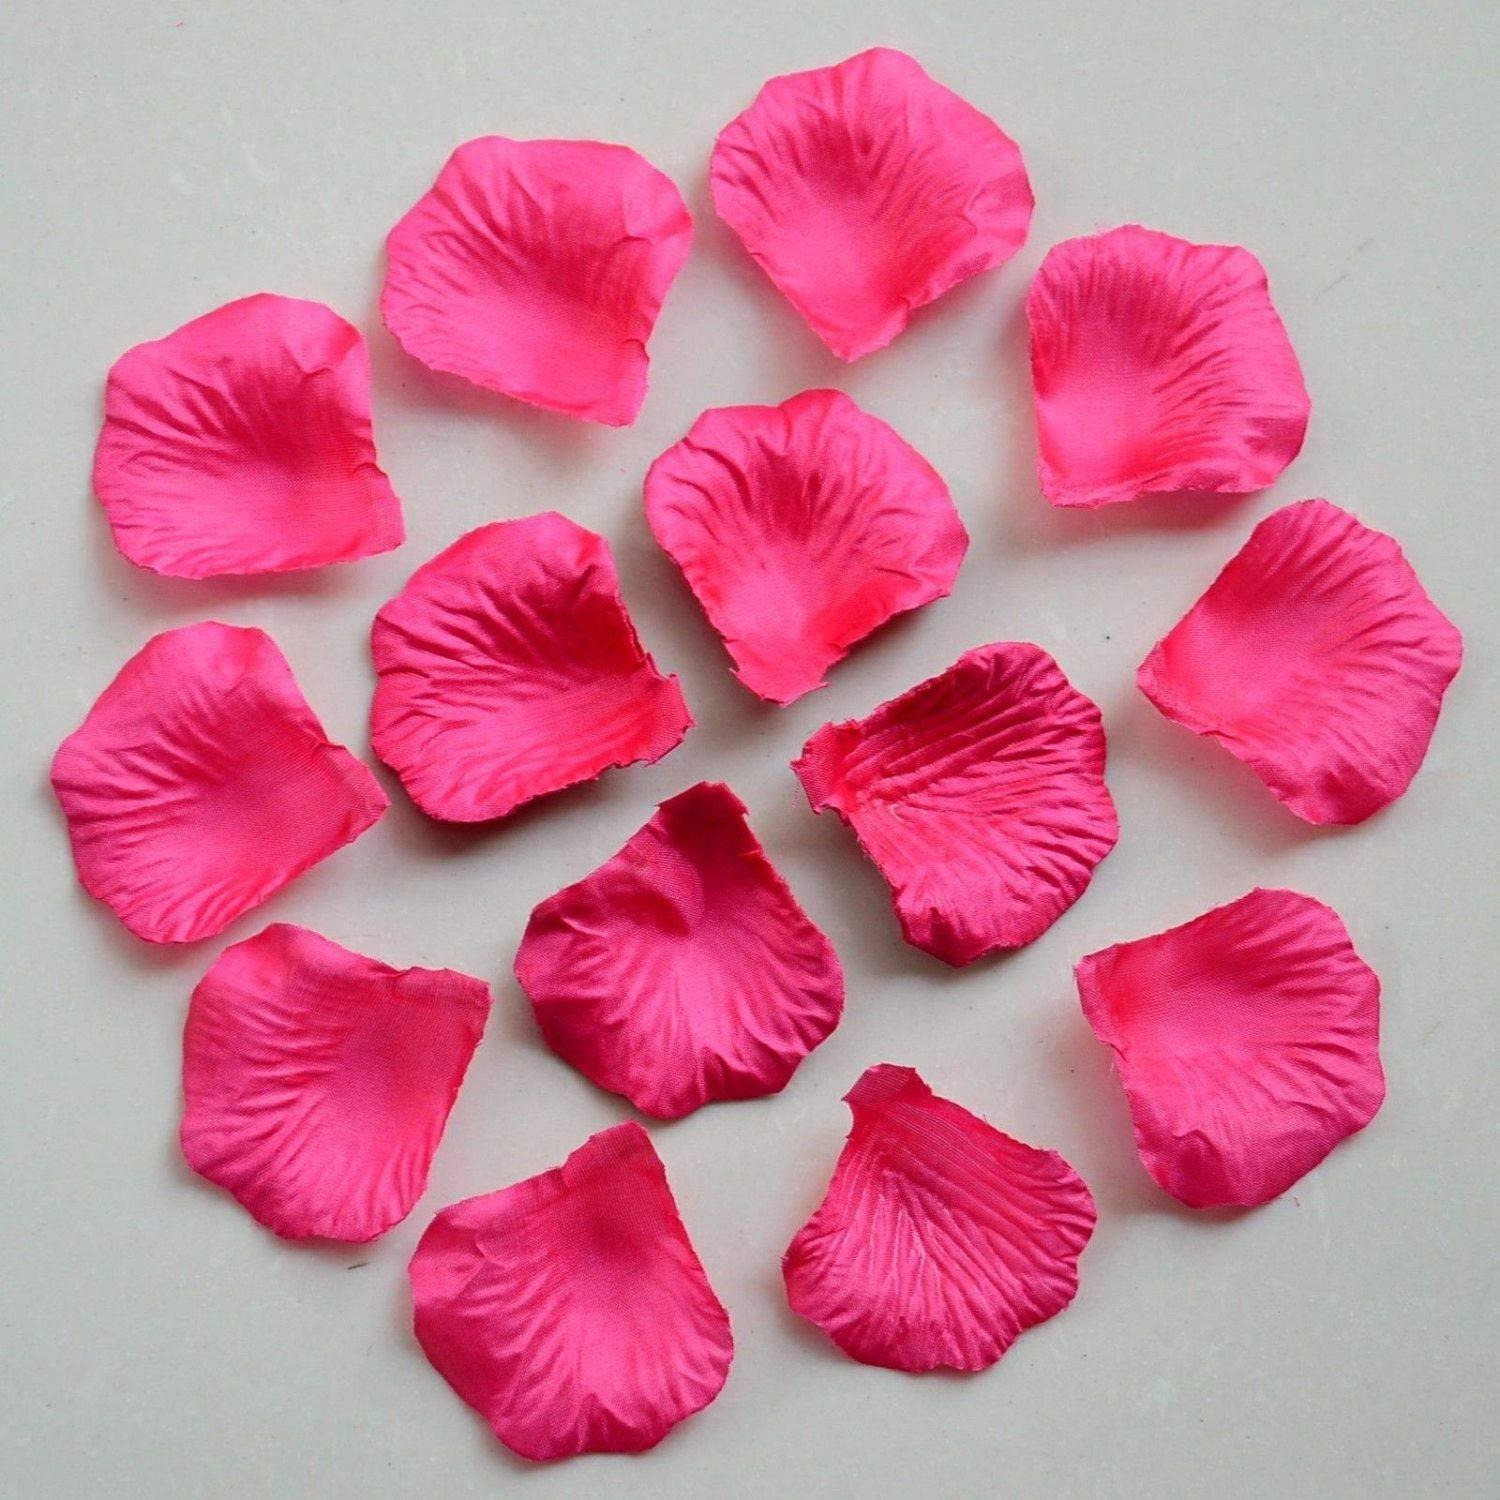 100pcs Dark Pink Silk Rose Petals Wedding Mothers Day Wedding Confetti Anniversary Table Decorations - image 1